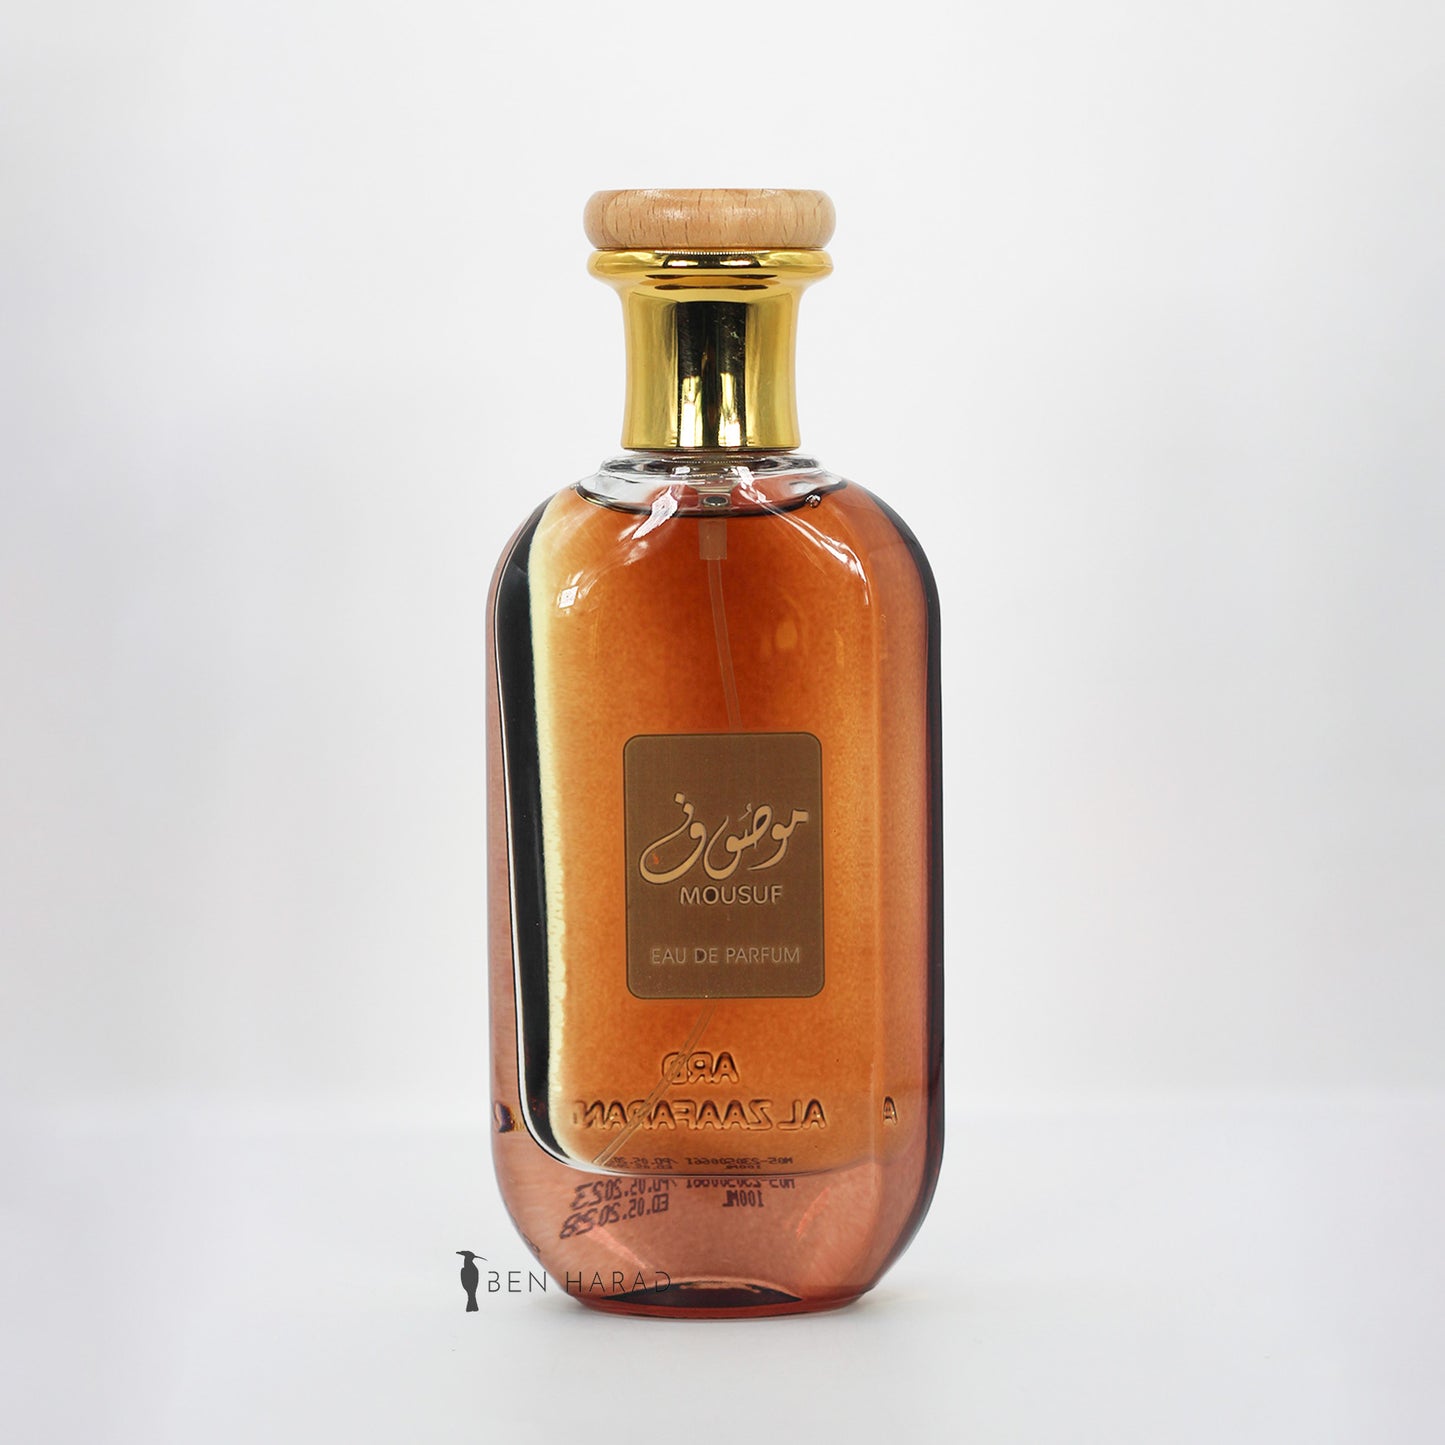 Mousuf perfume 100ml EDP